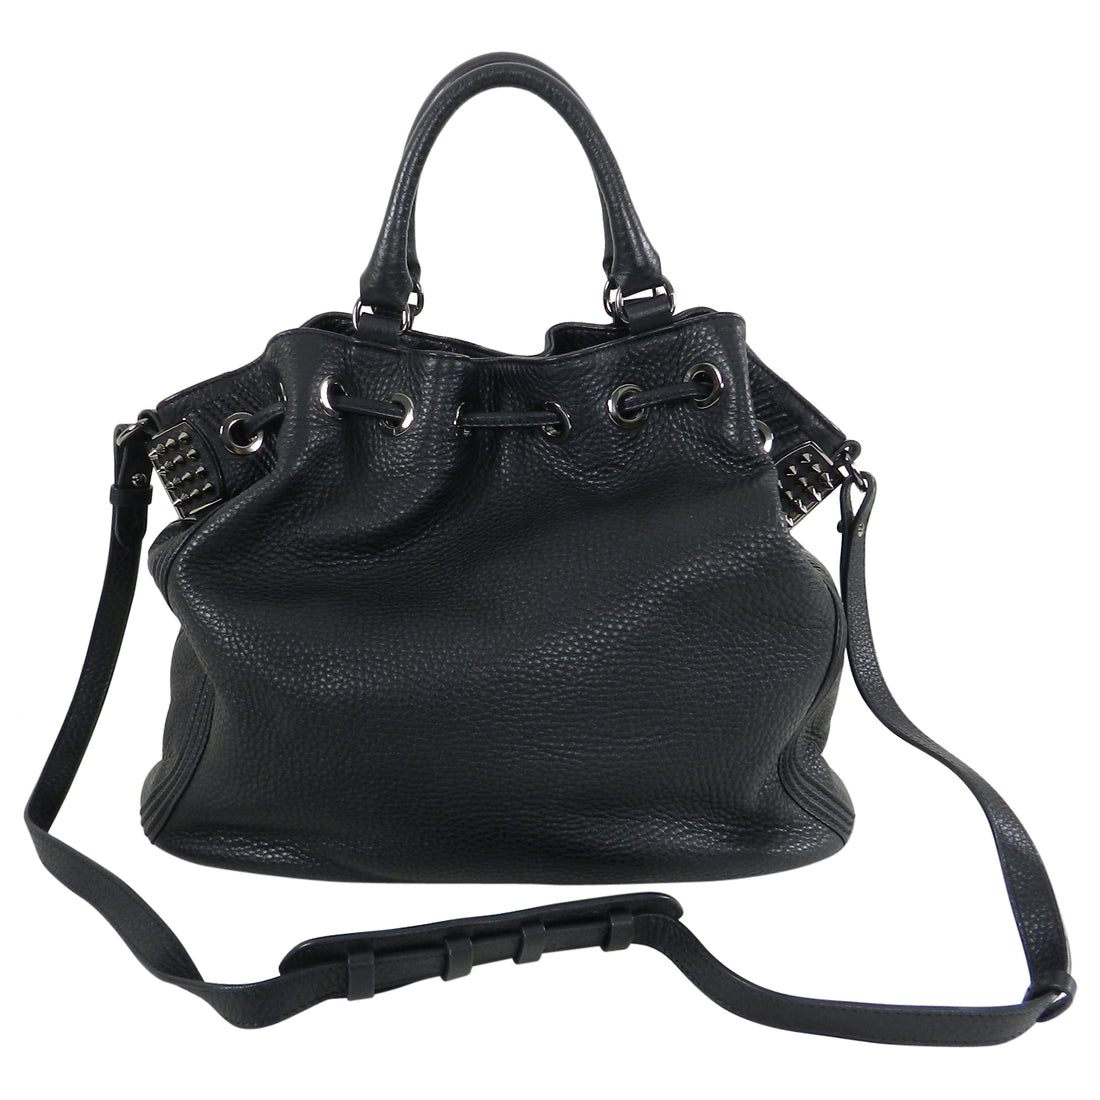 Christian Louboutin Black Leather Drawstring Studded Bag